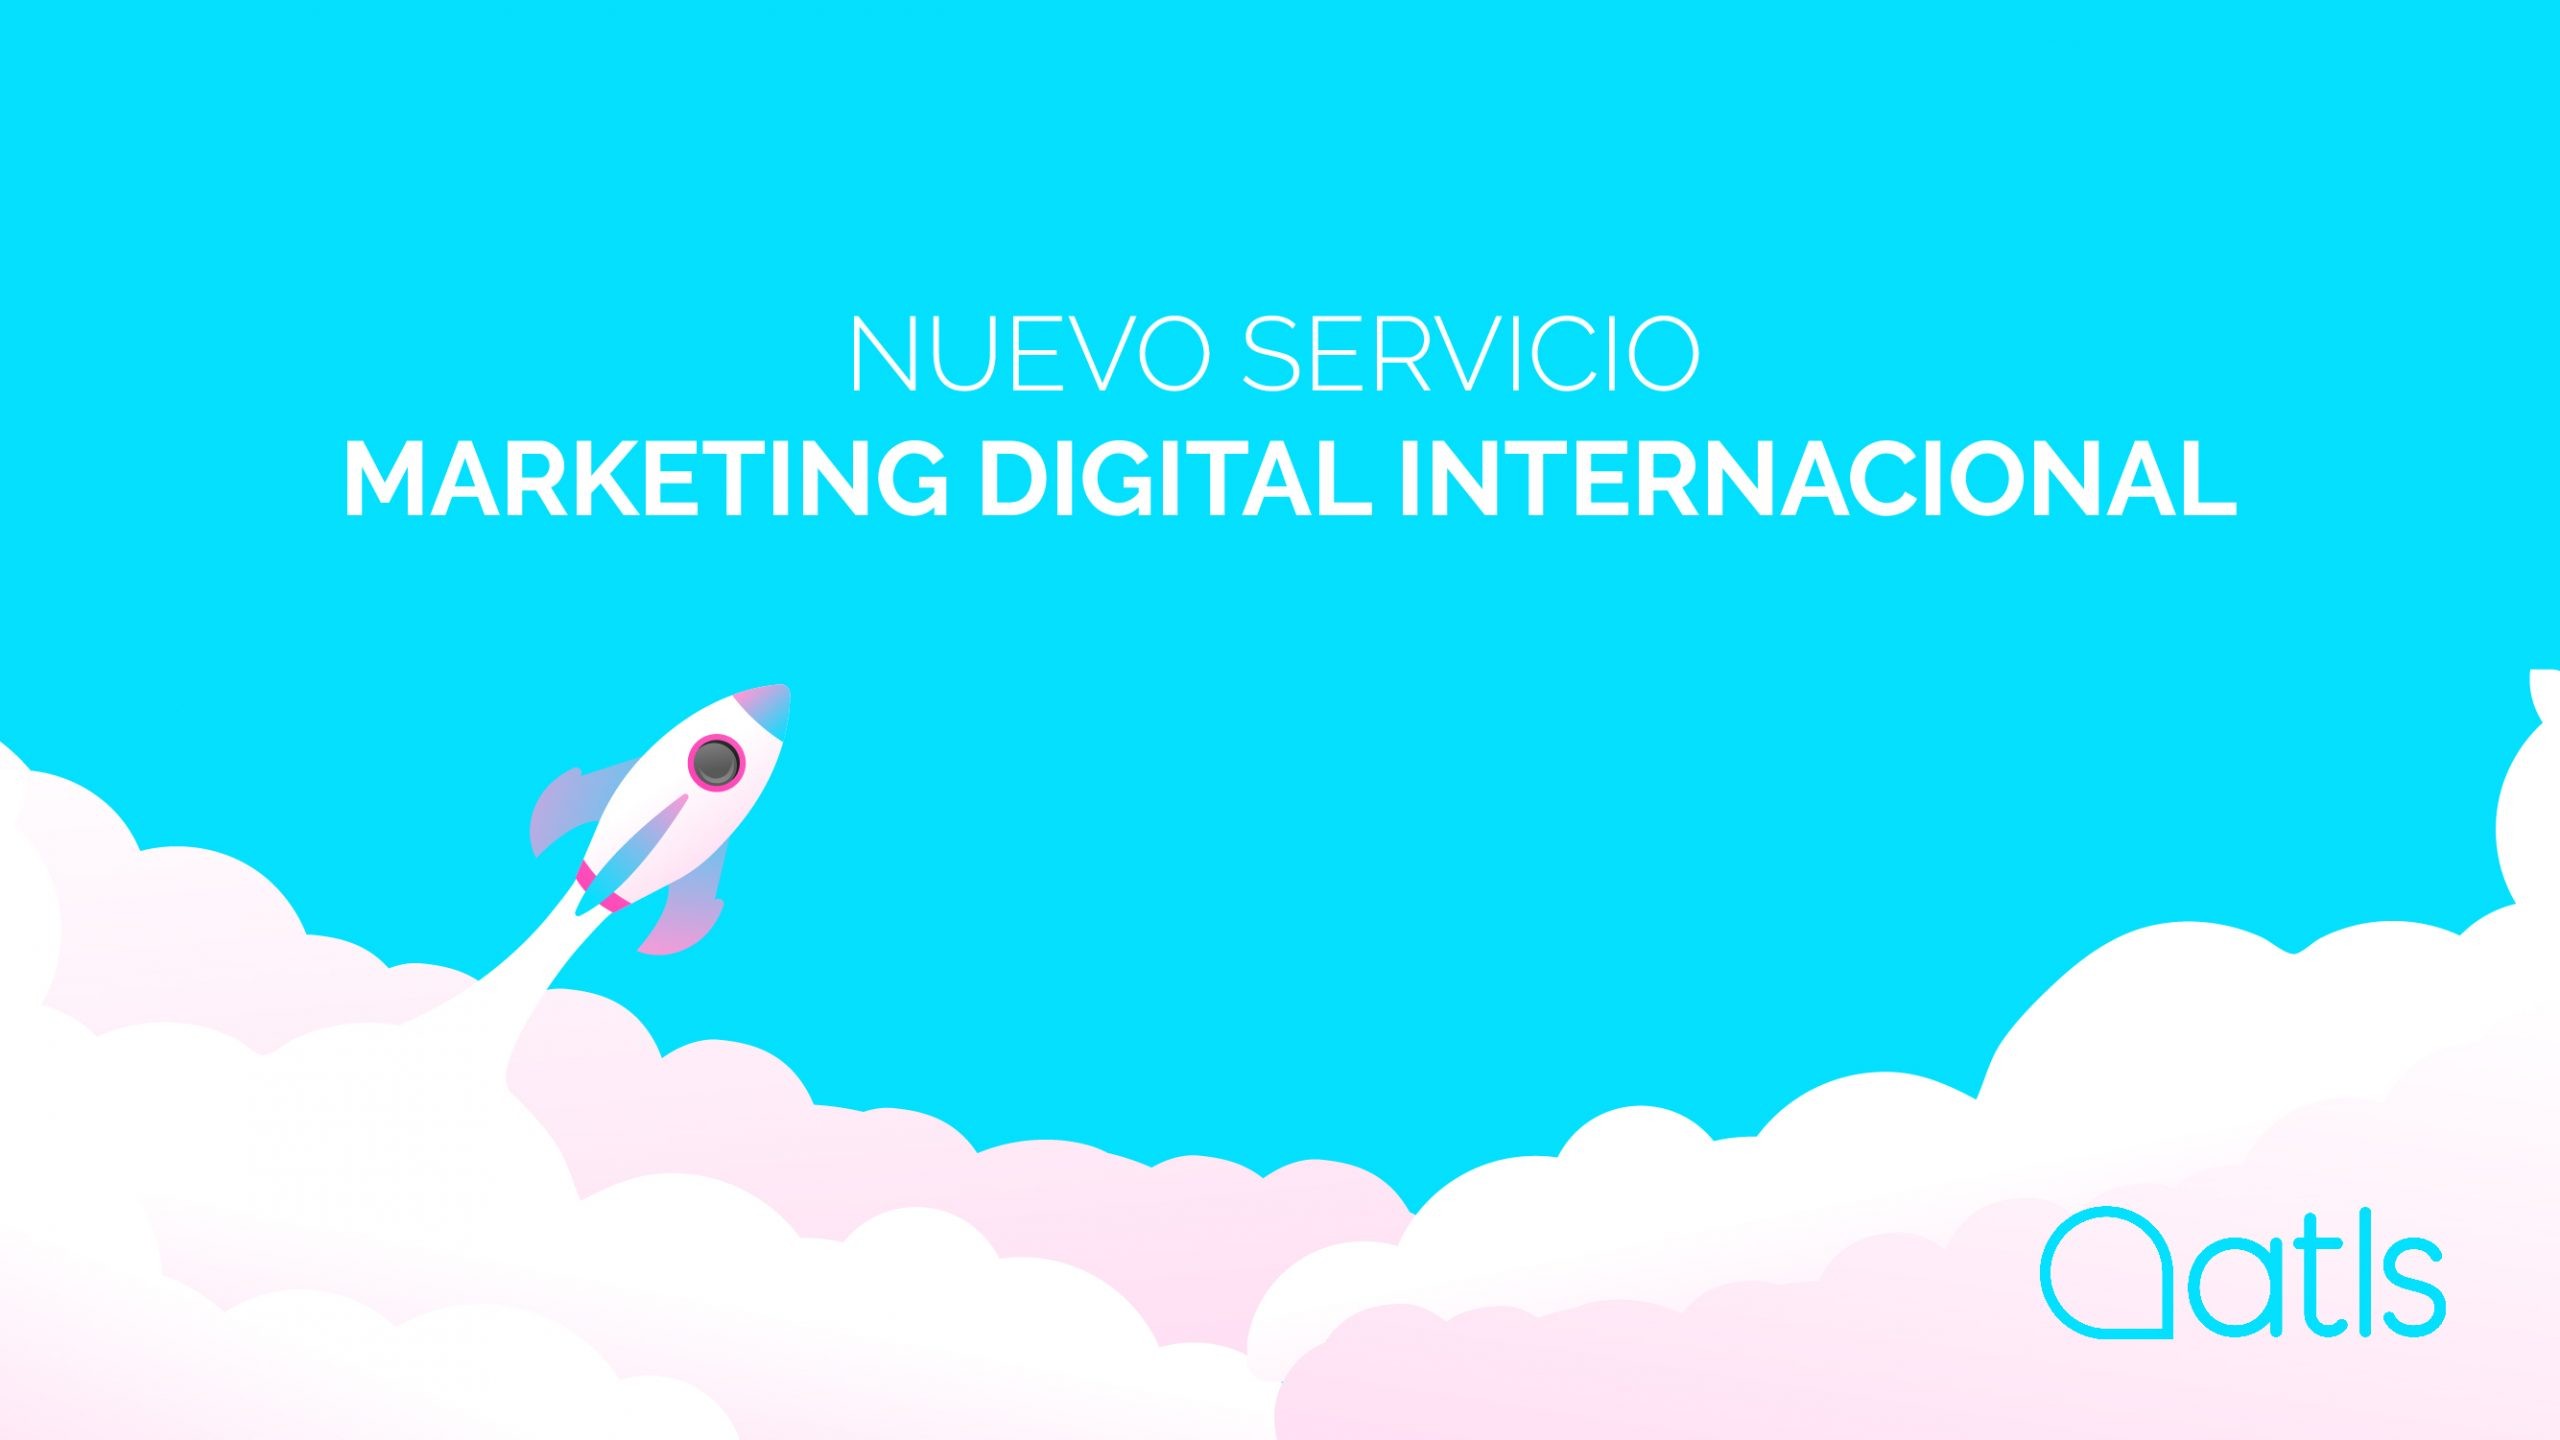 International marketing services